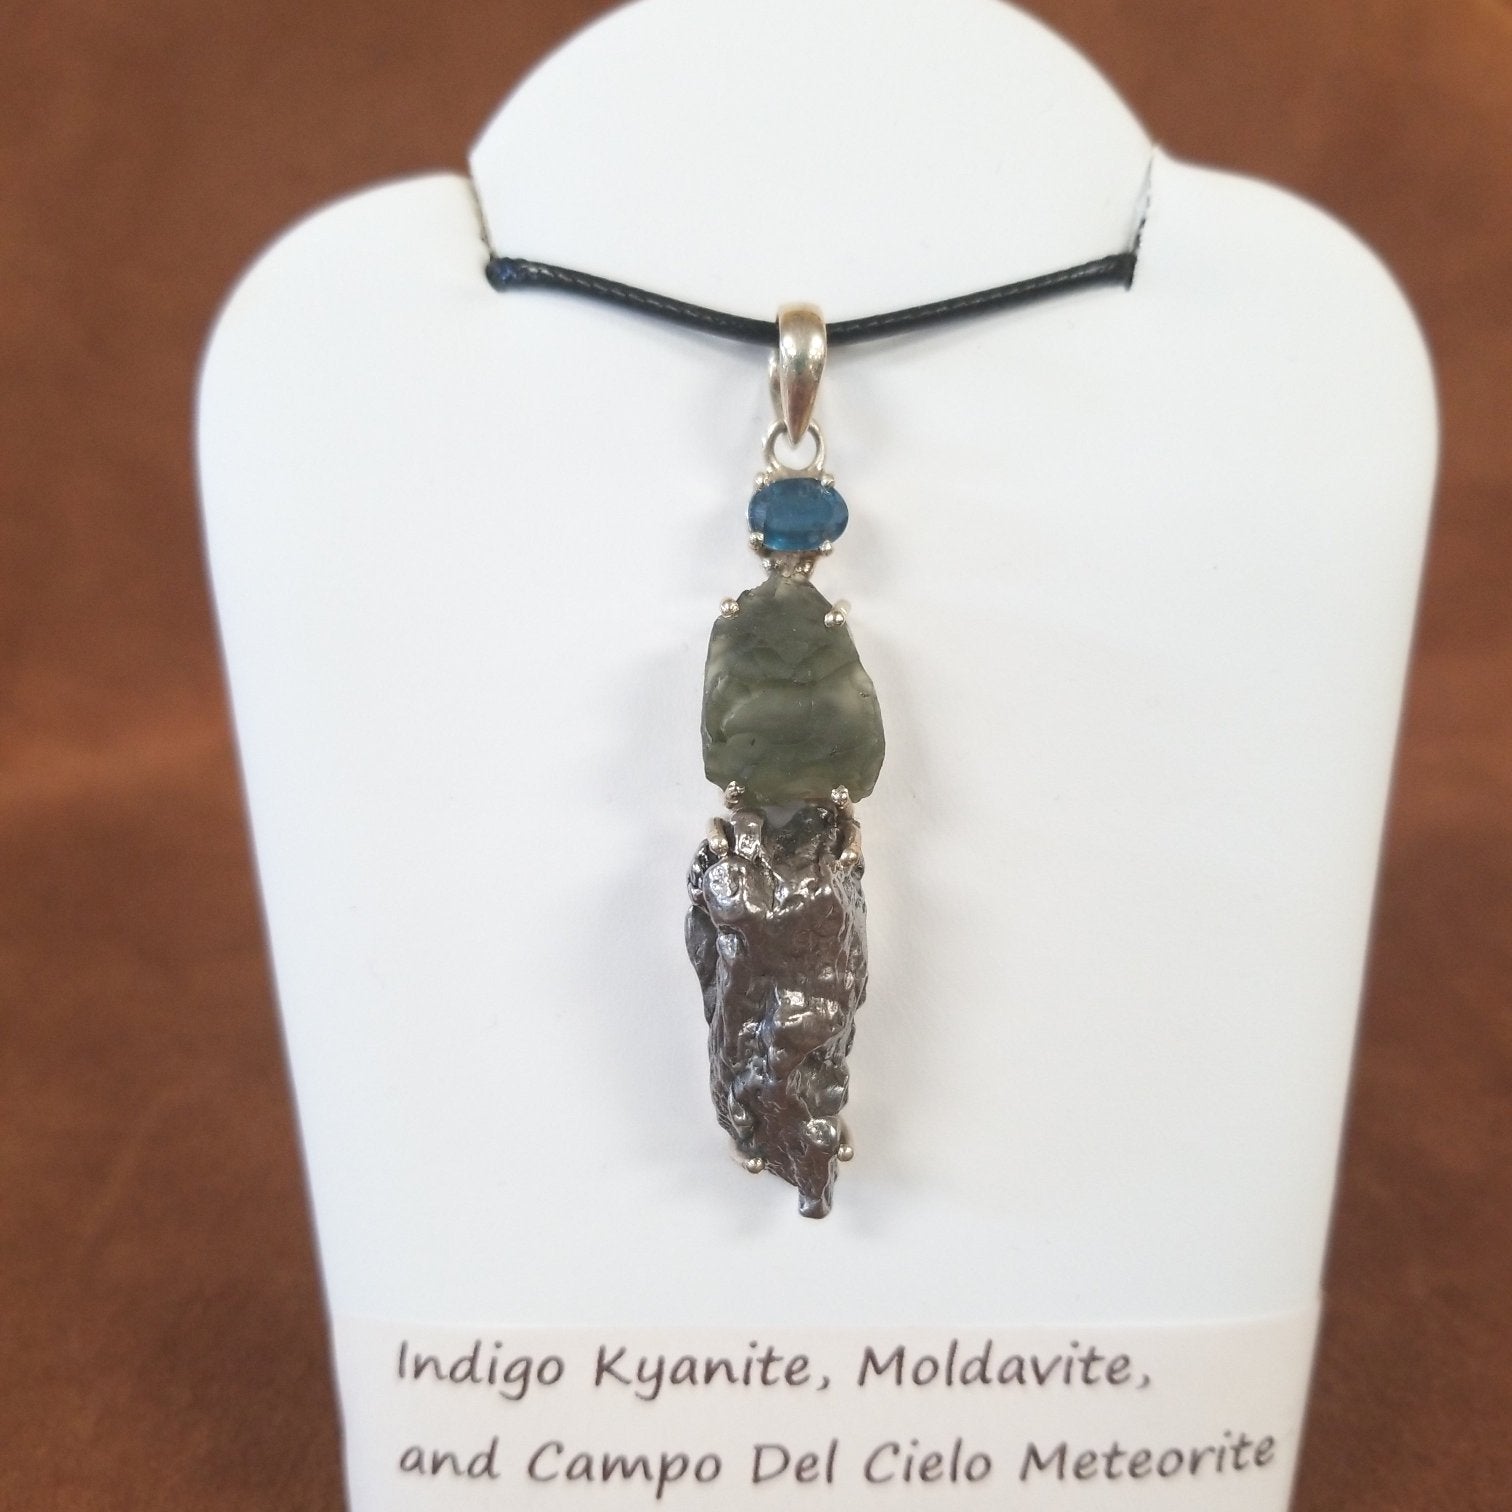 Beautiful Moldavite Necklace With Indigo Kyanite, Moldavite, and Campo Del Cielo Meteorite